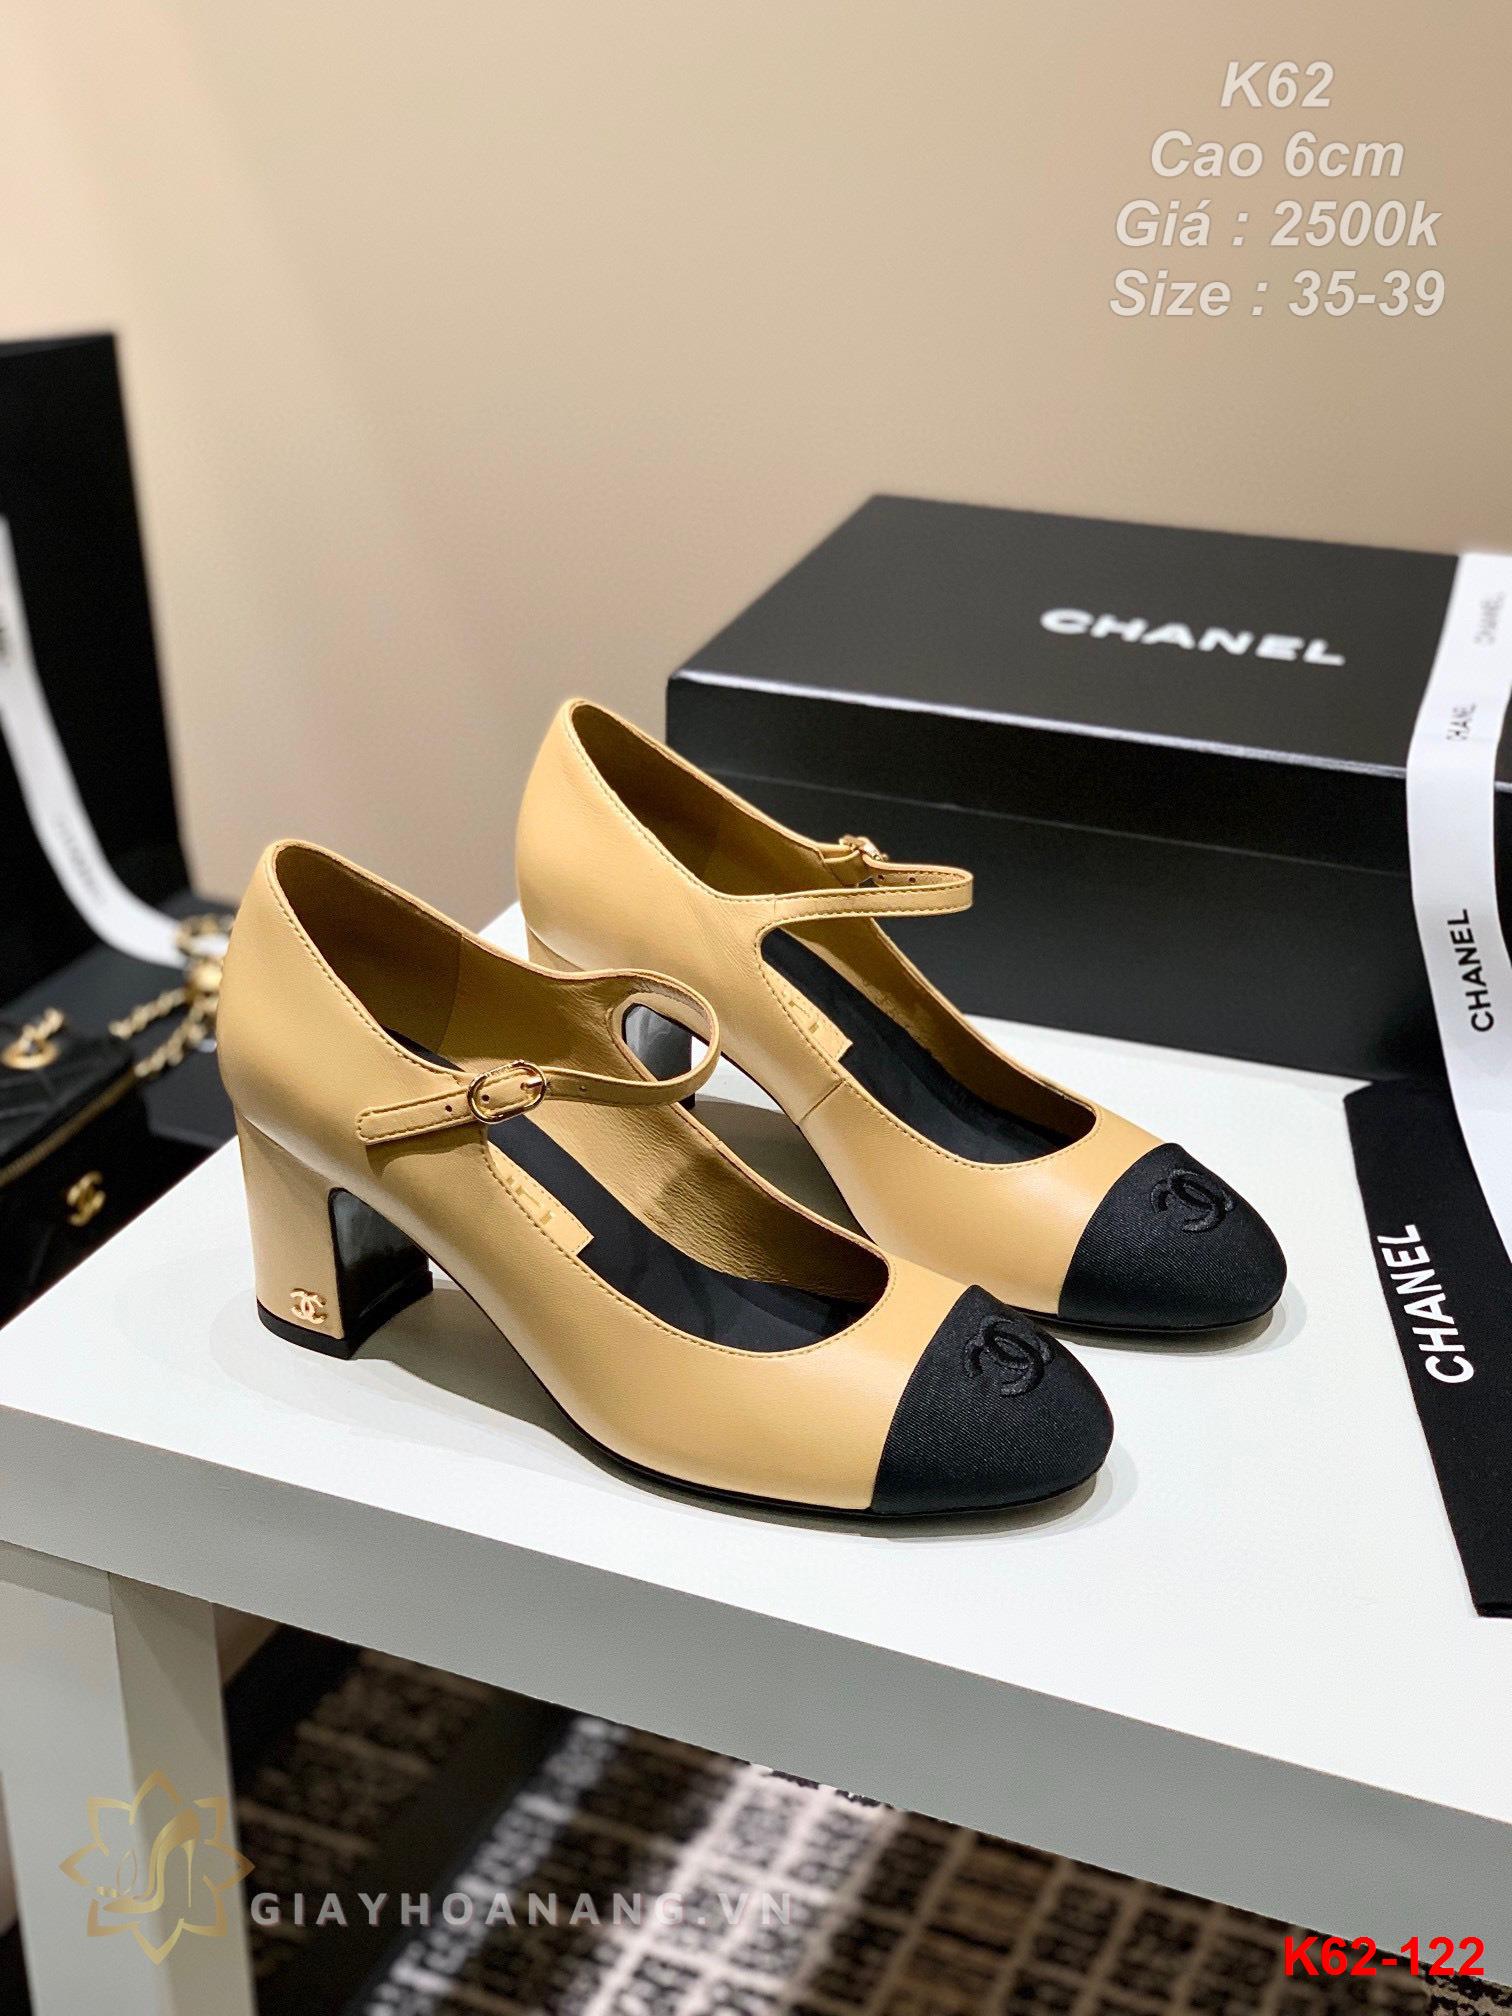 K62-122 Chanel giày cao gót 6cm siêu cấp